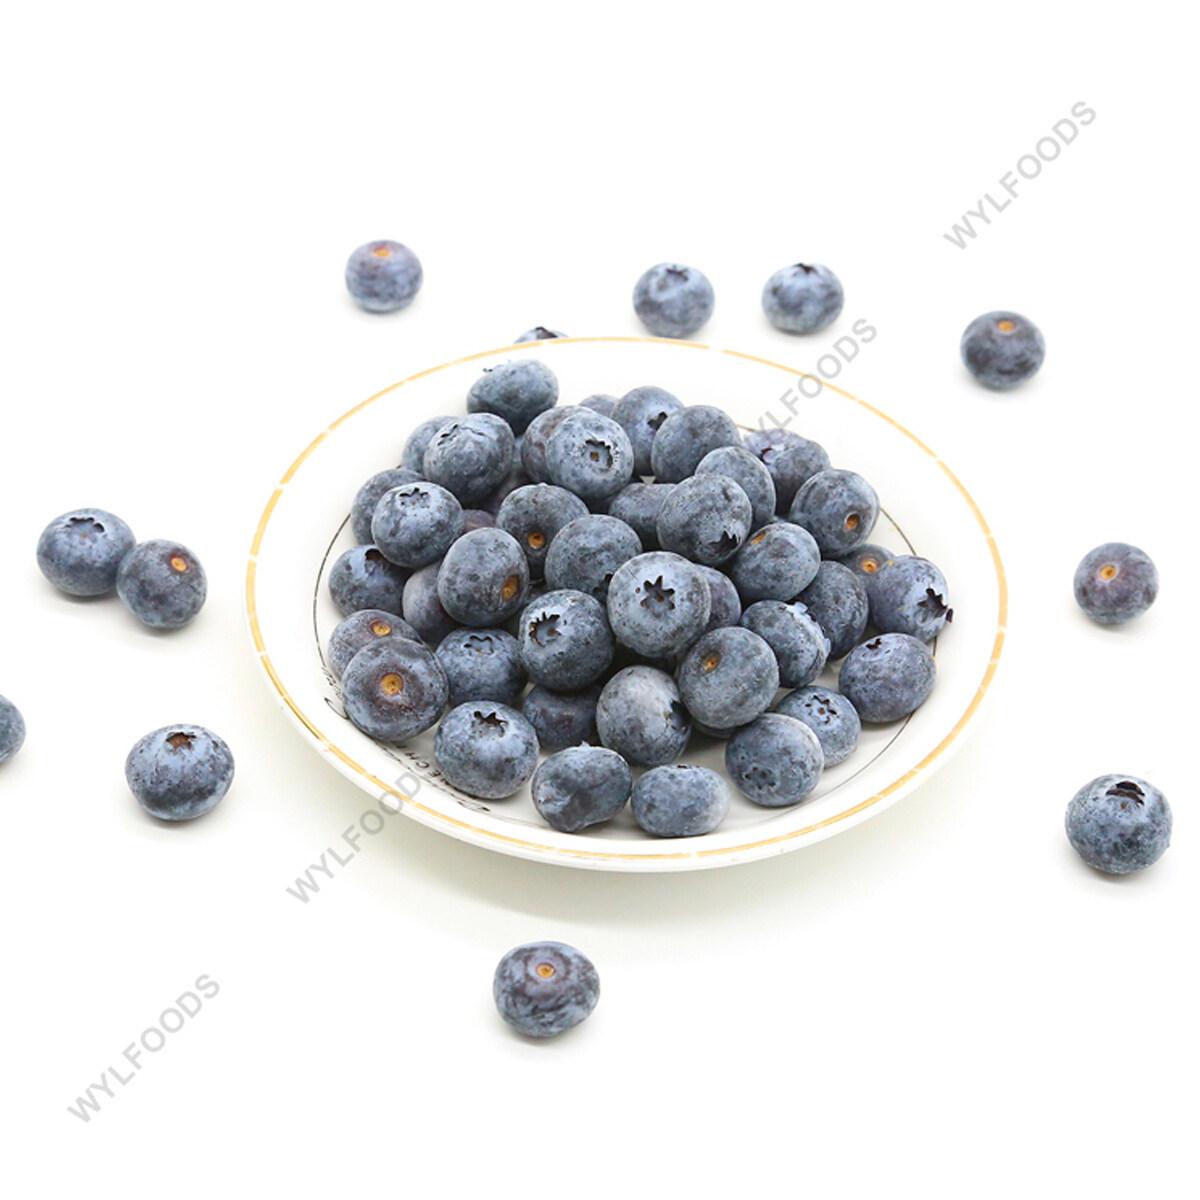 Buah -buahan Beku Blueberry Bekas Bekas Bekas Bekas Beku Beku Bekas Beku Beku Beku Beku Beku Beku Beku Beku Beku Beku Beku Beku Beku